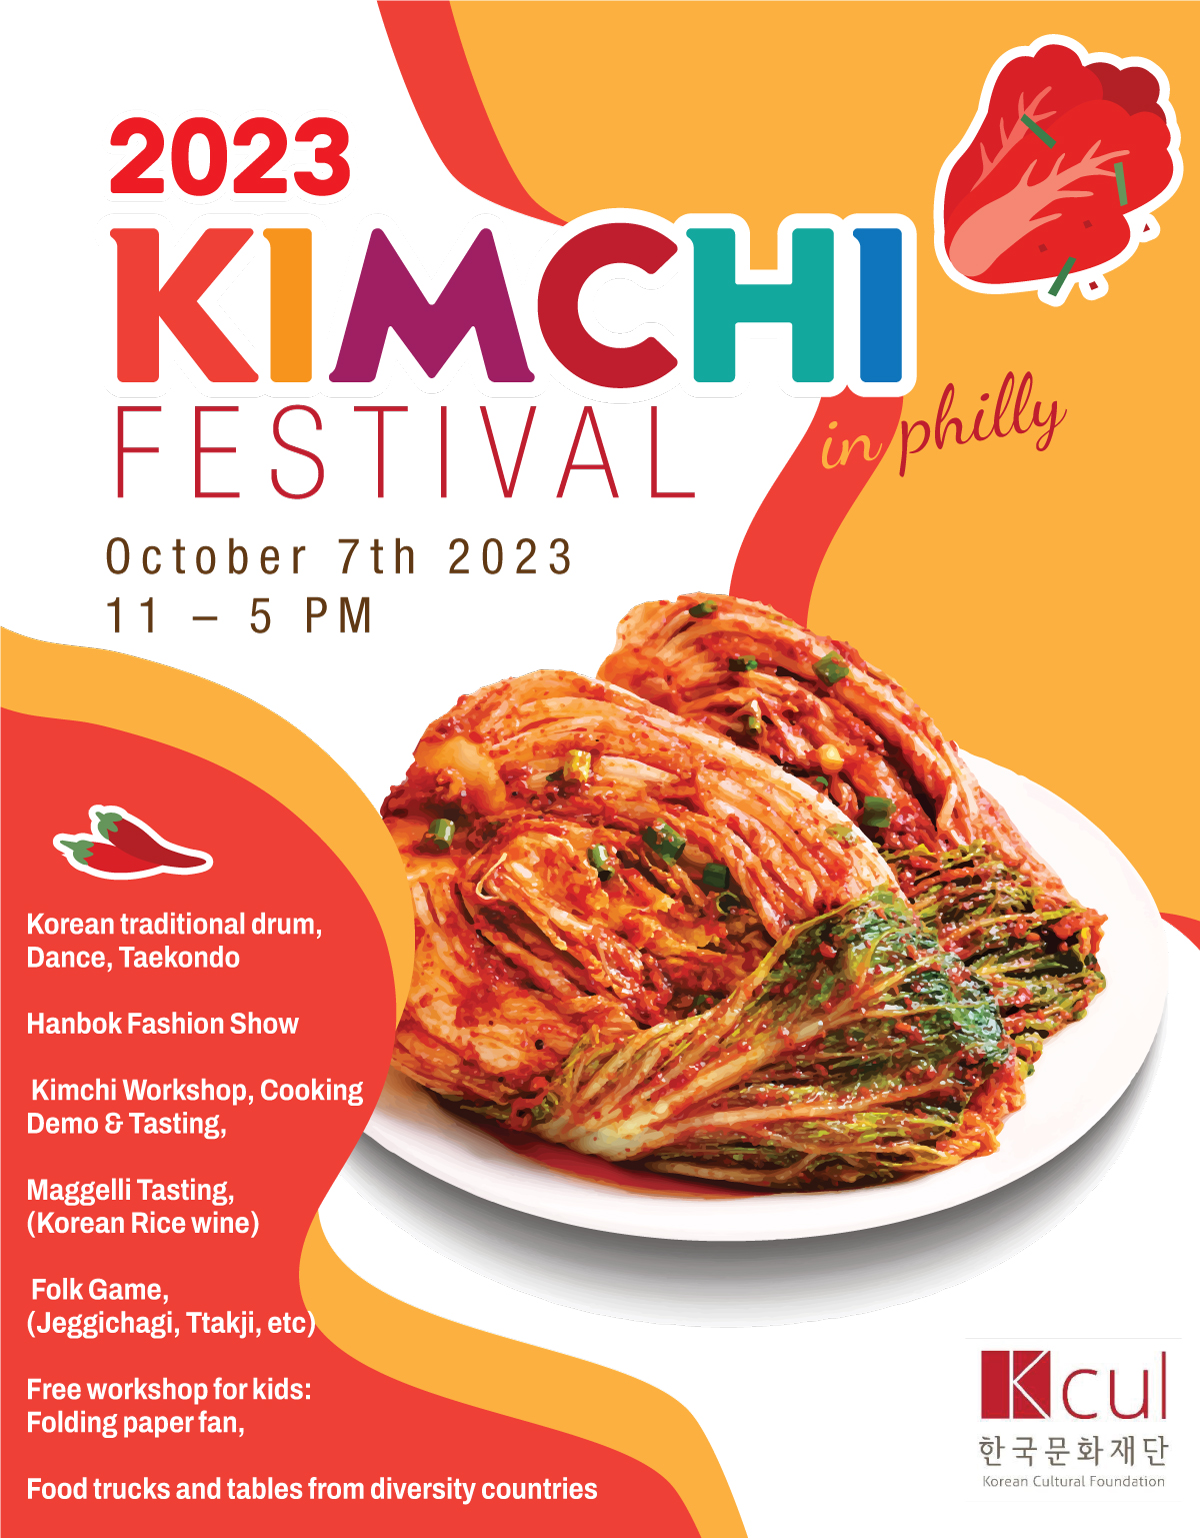 Kimchi Festival 2023 Kimchi Festival in philly 필라델피아 김치페스티벌